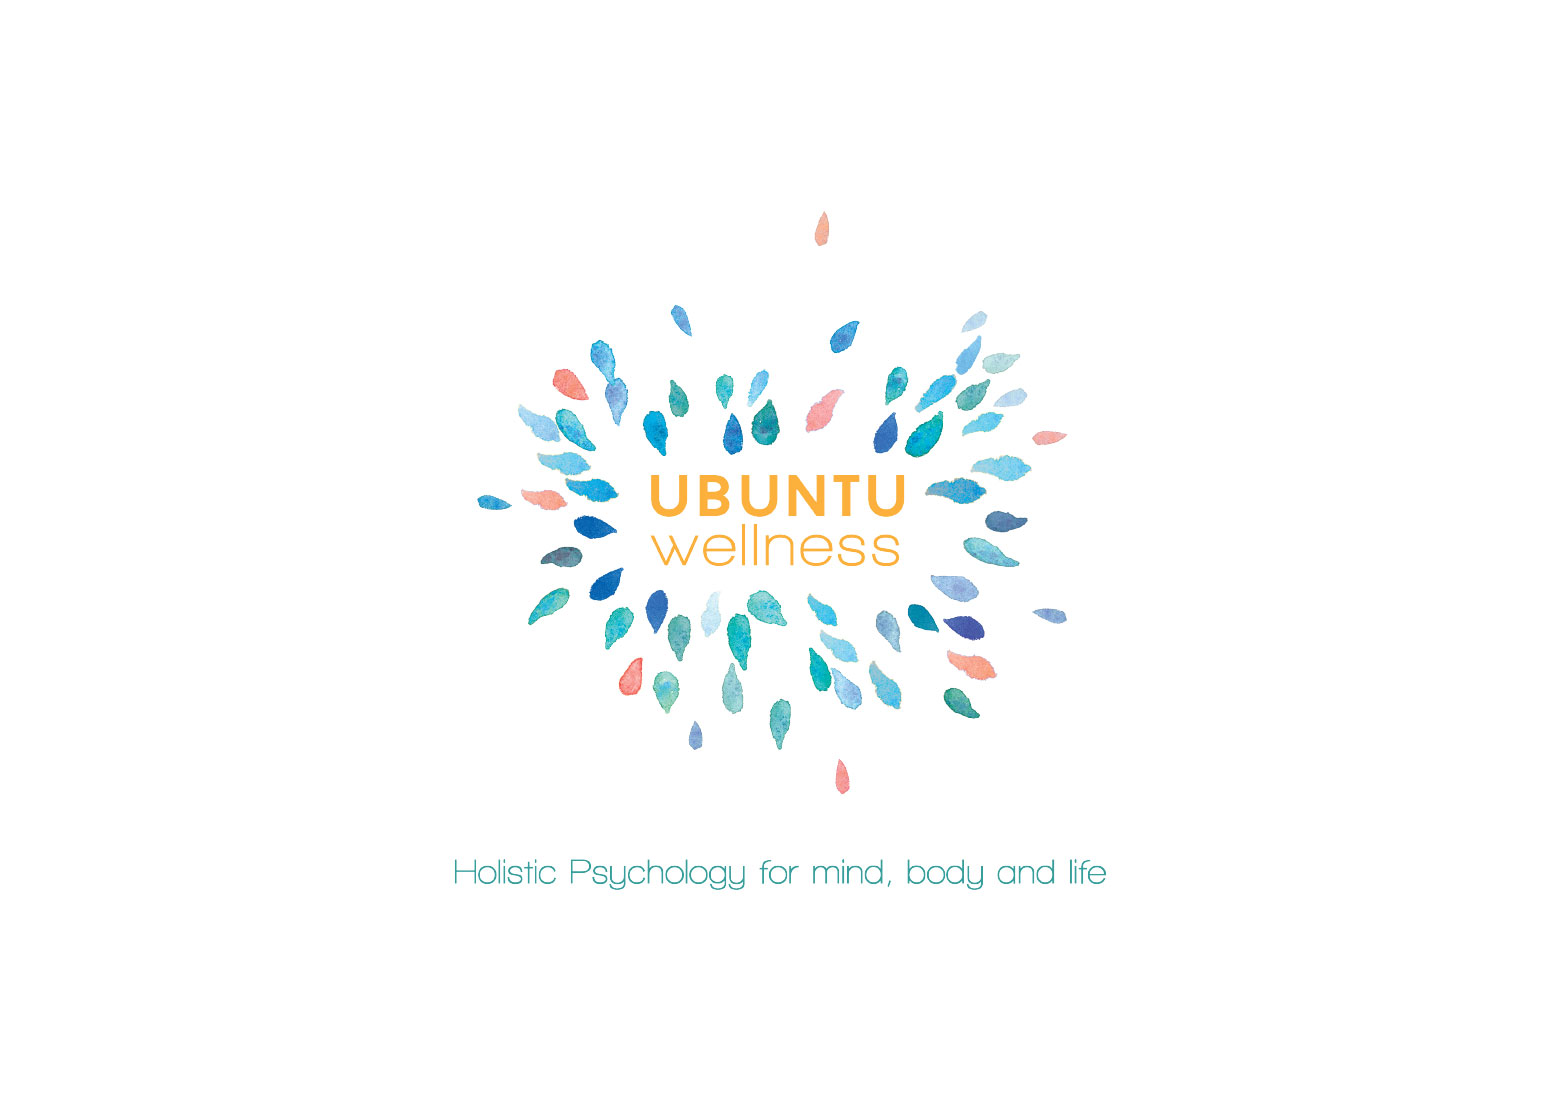 Ubuntu Wellness by Rising Creative